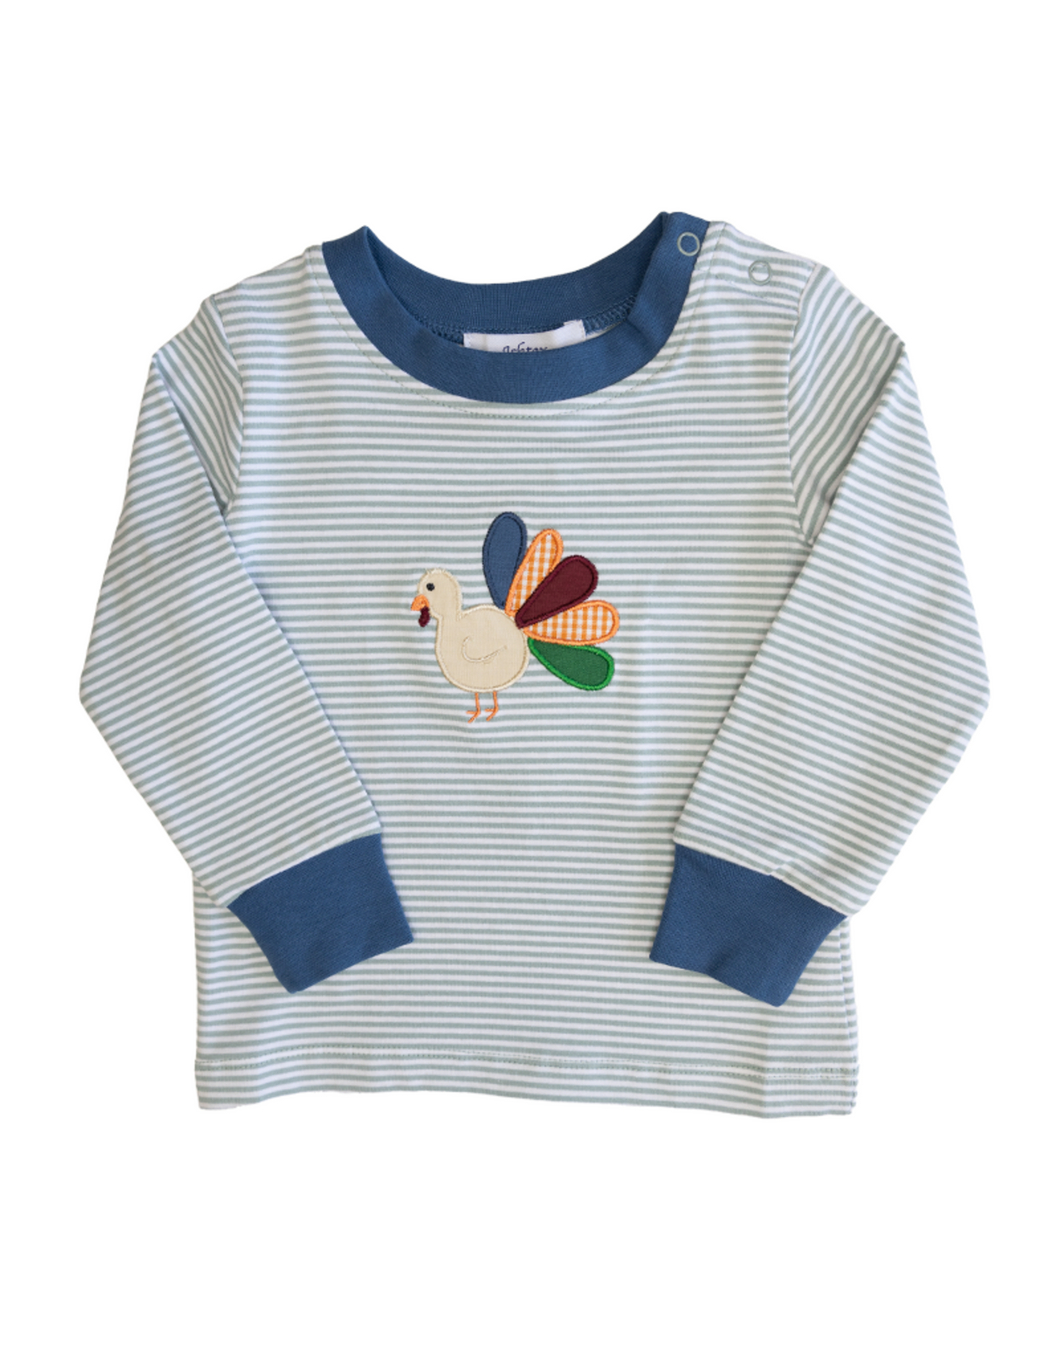 Ishtex - Sage Stripe Turkey Applique Boy's T-Shirt